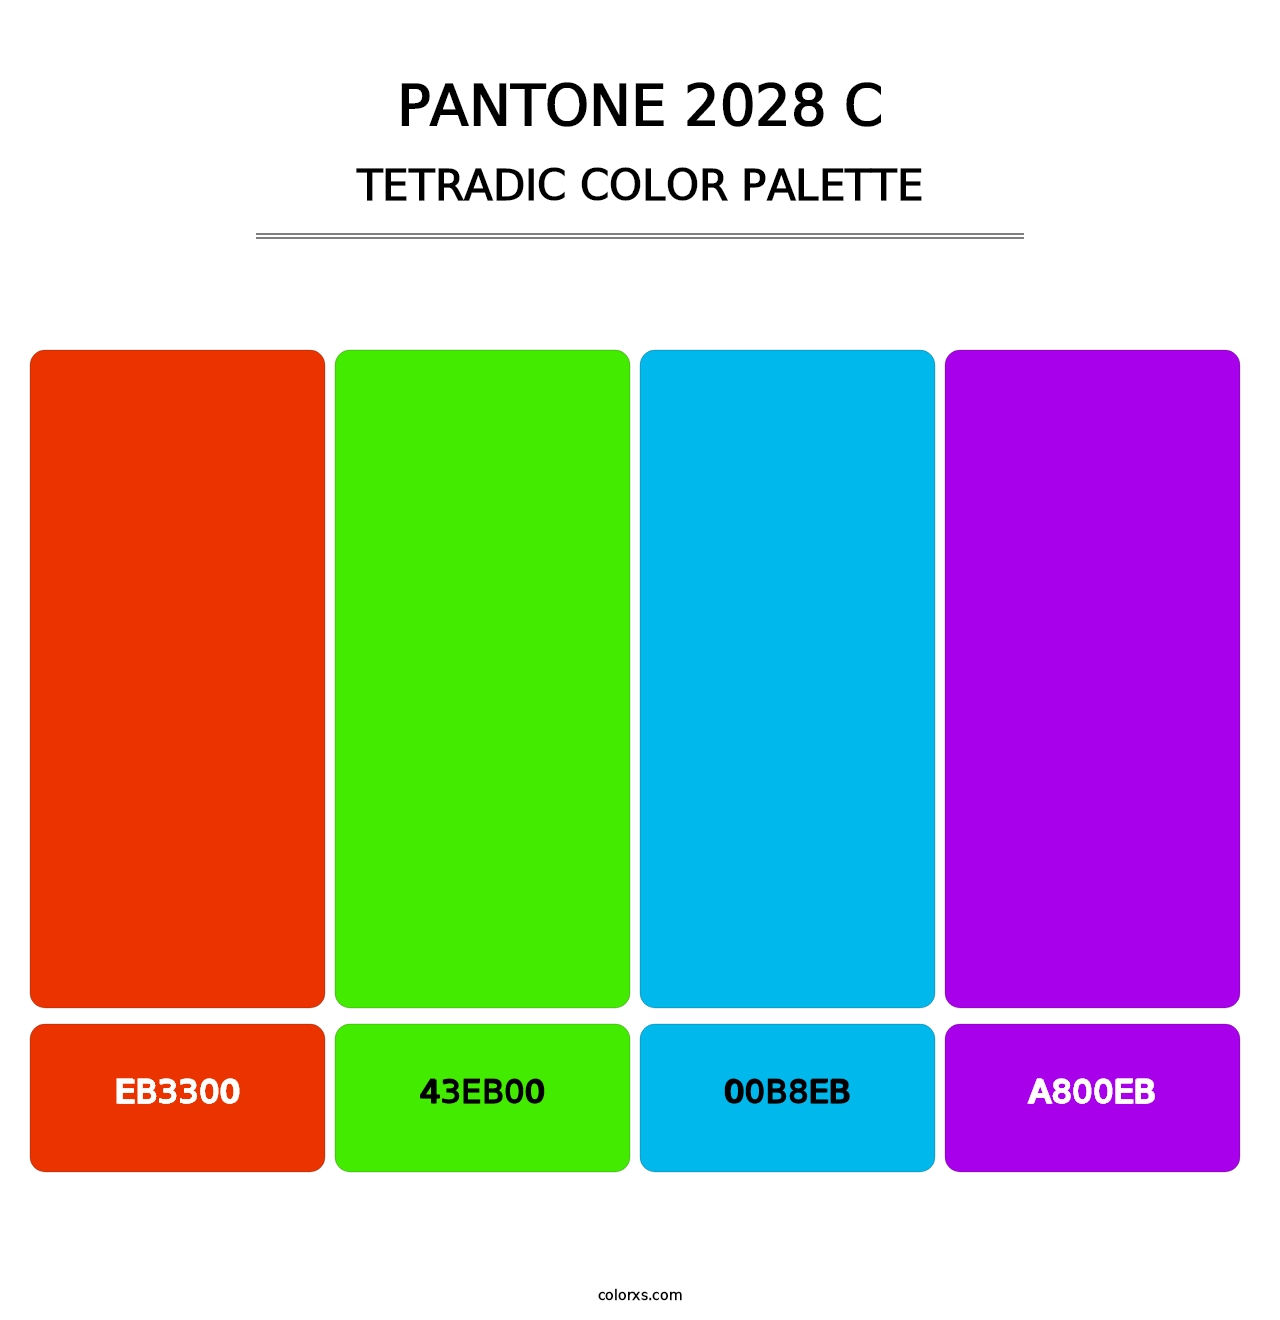 PANTONE 2028 C - Tetradic Color Palette